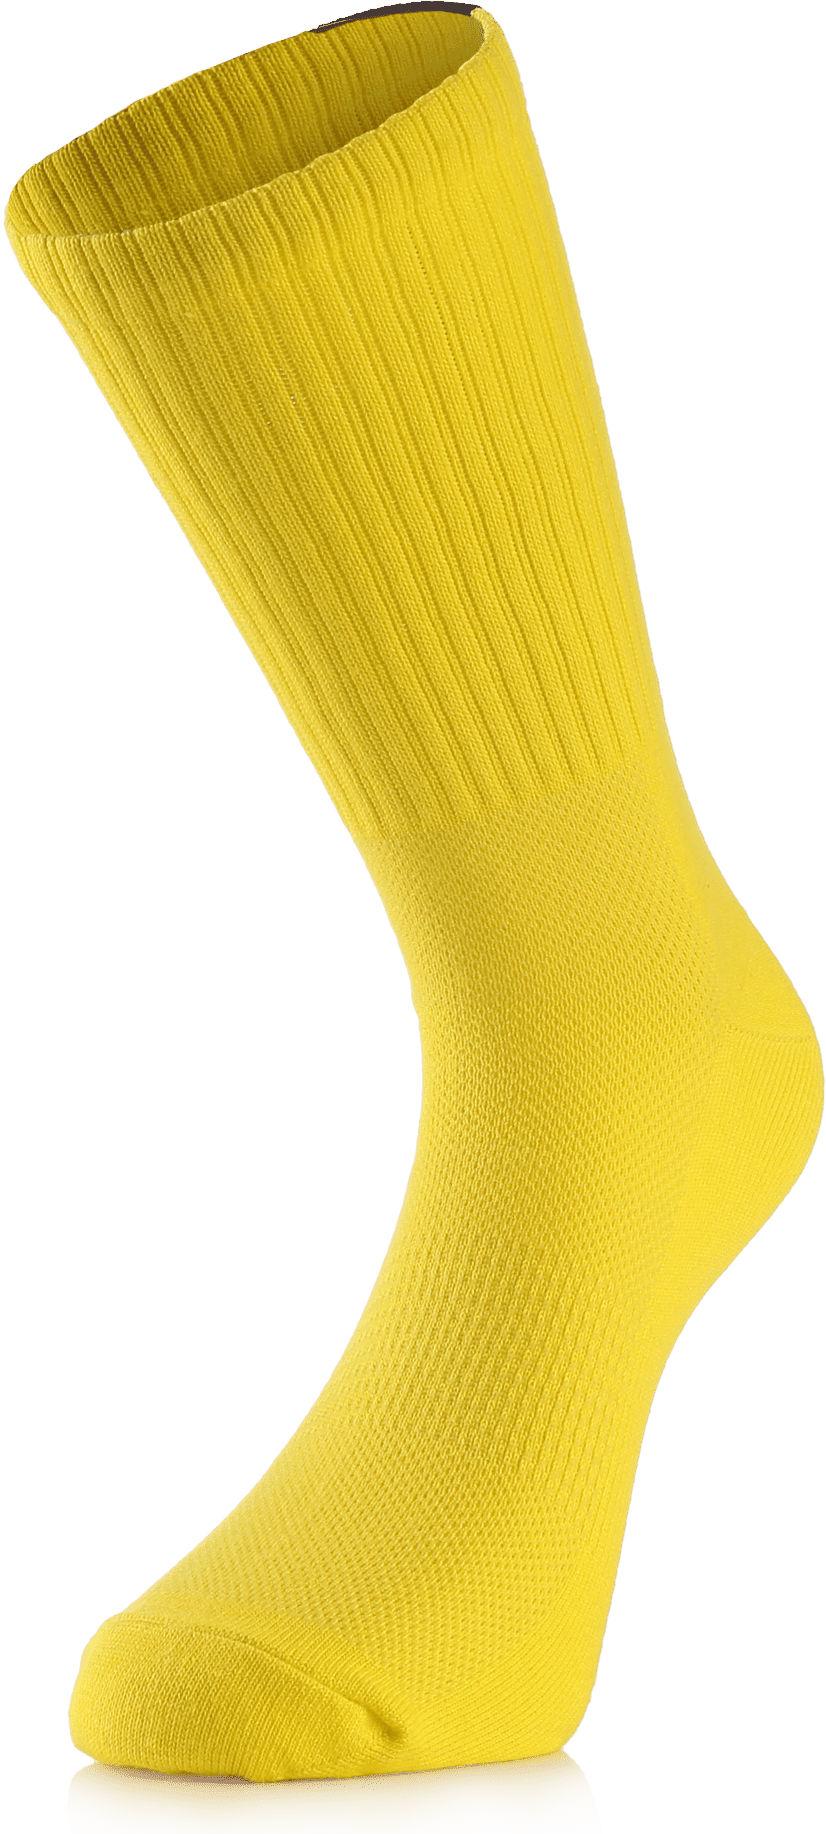 Skarpety Football socks BU1